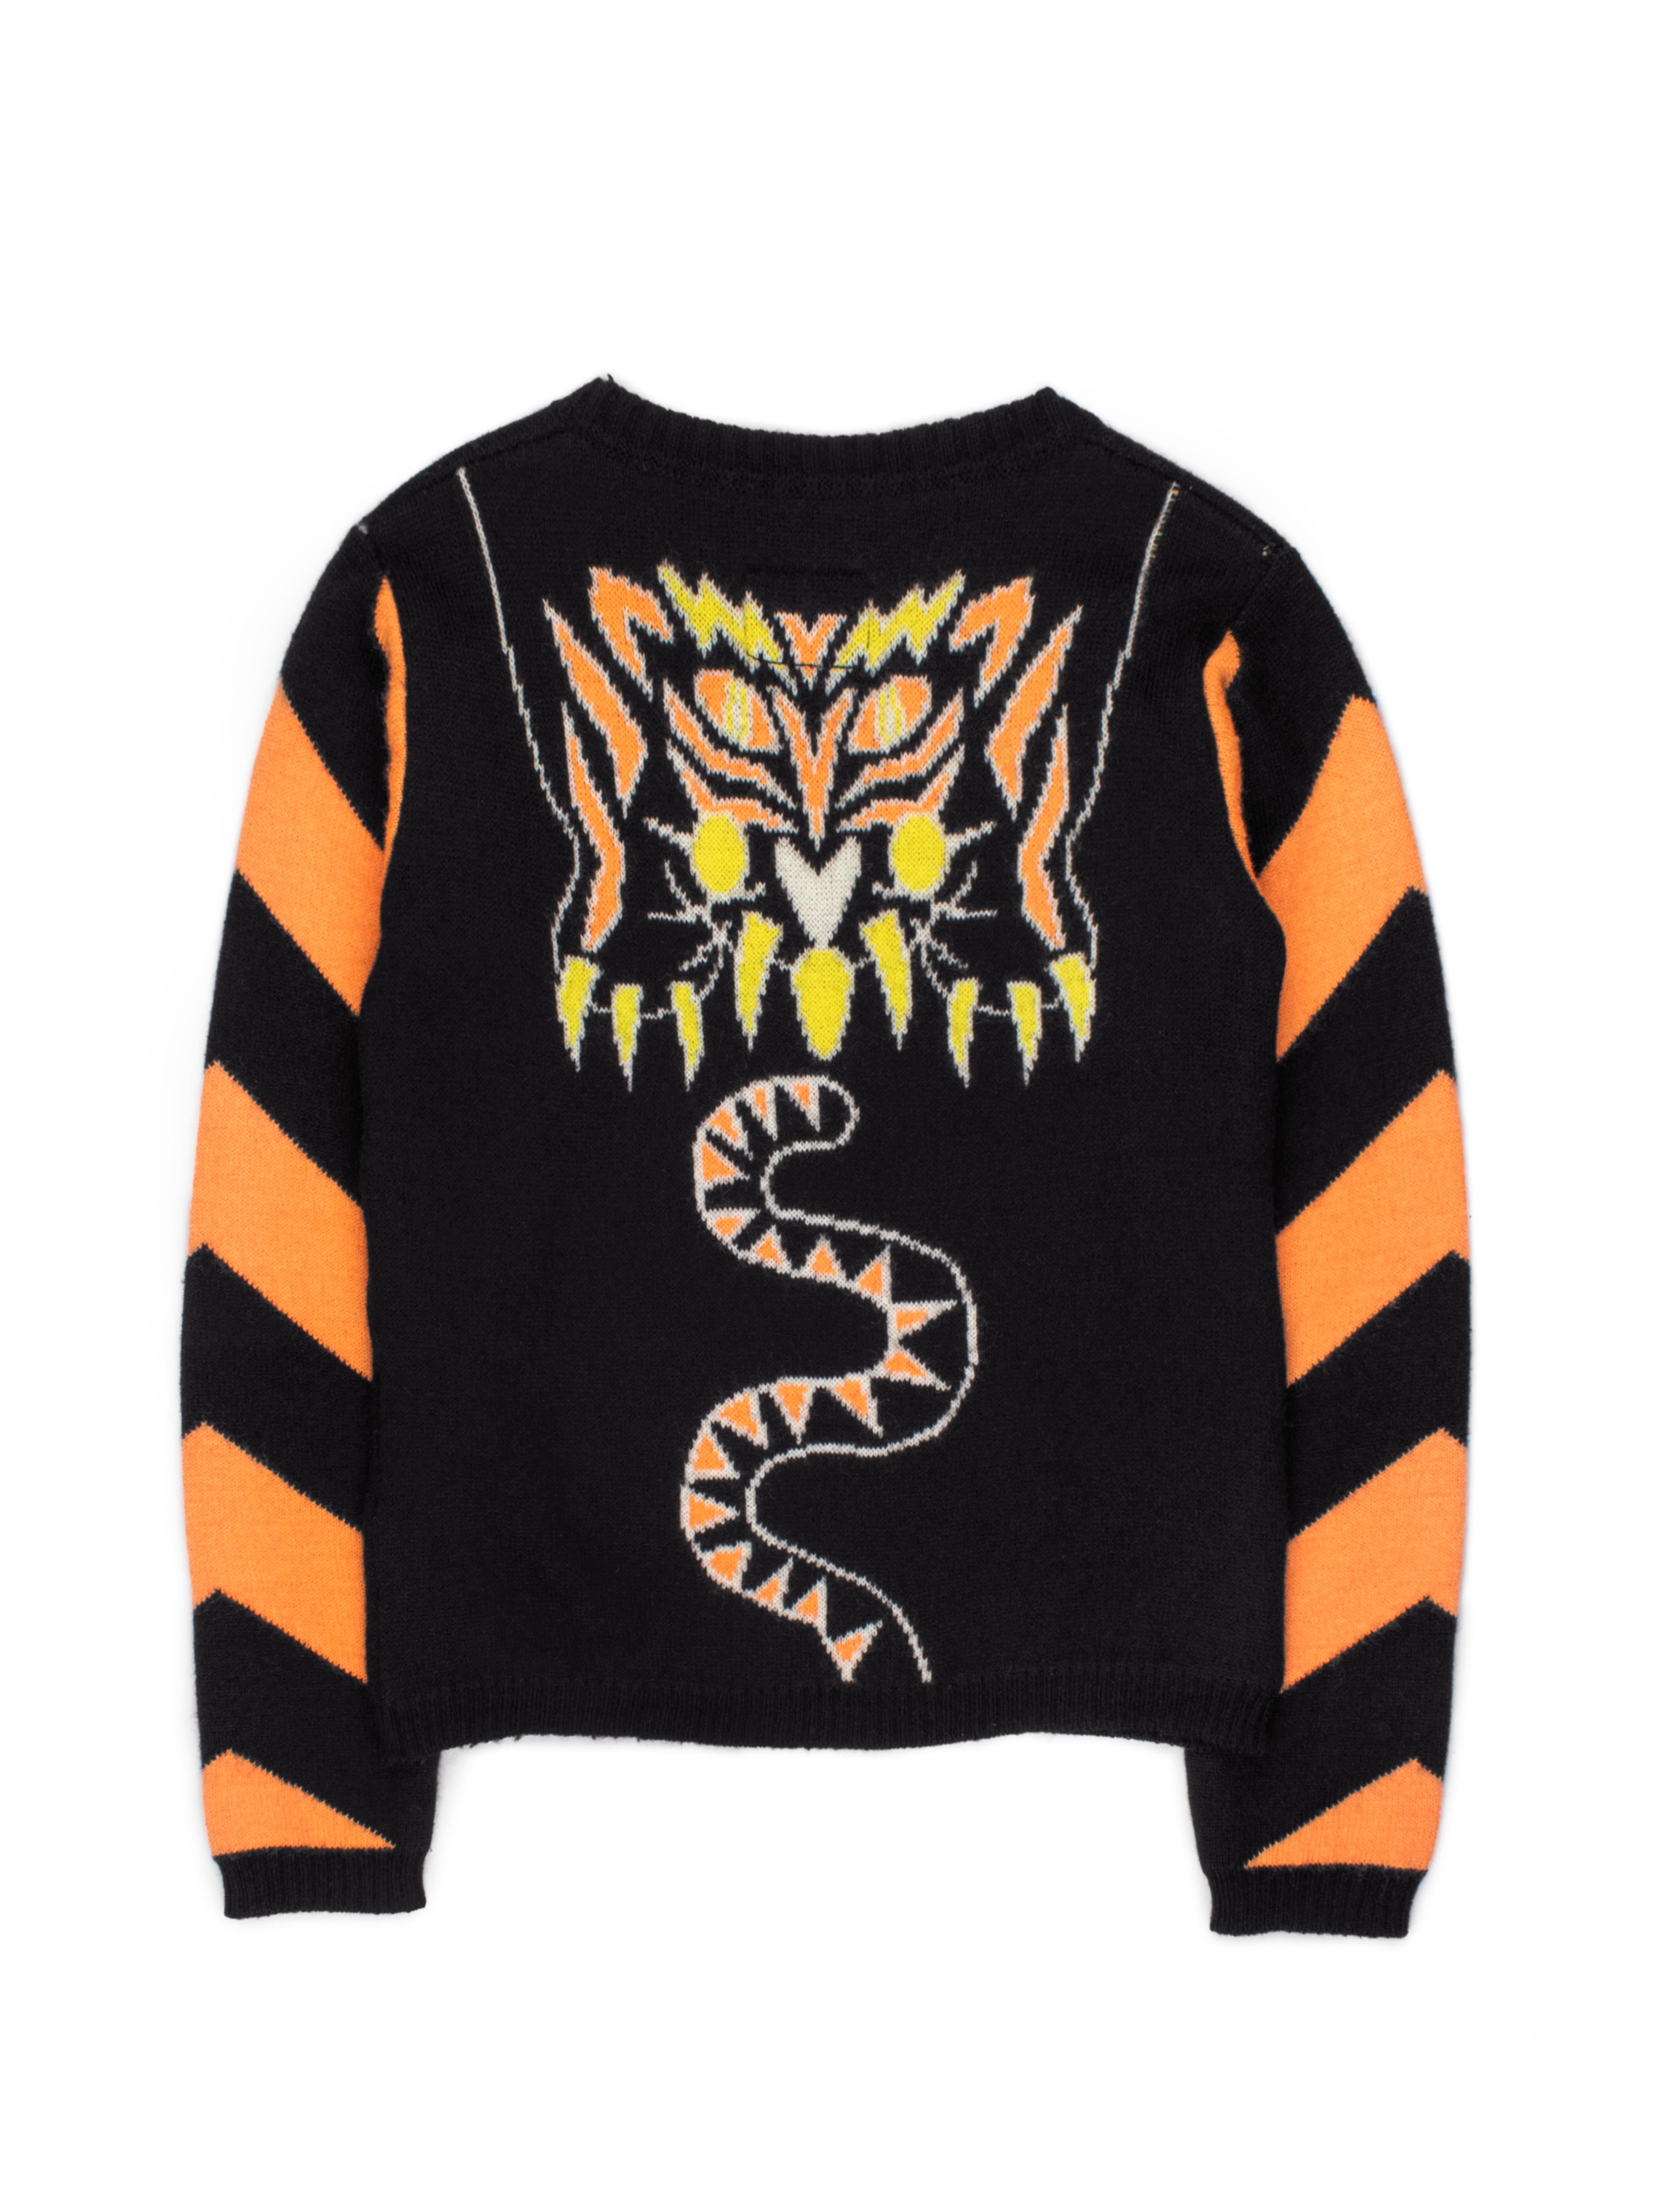 Black Wild & Lethal Trash AW1995 Intarsia Tiger Sweater